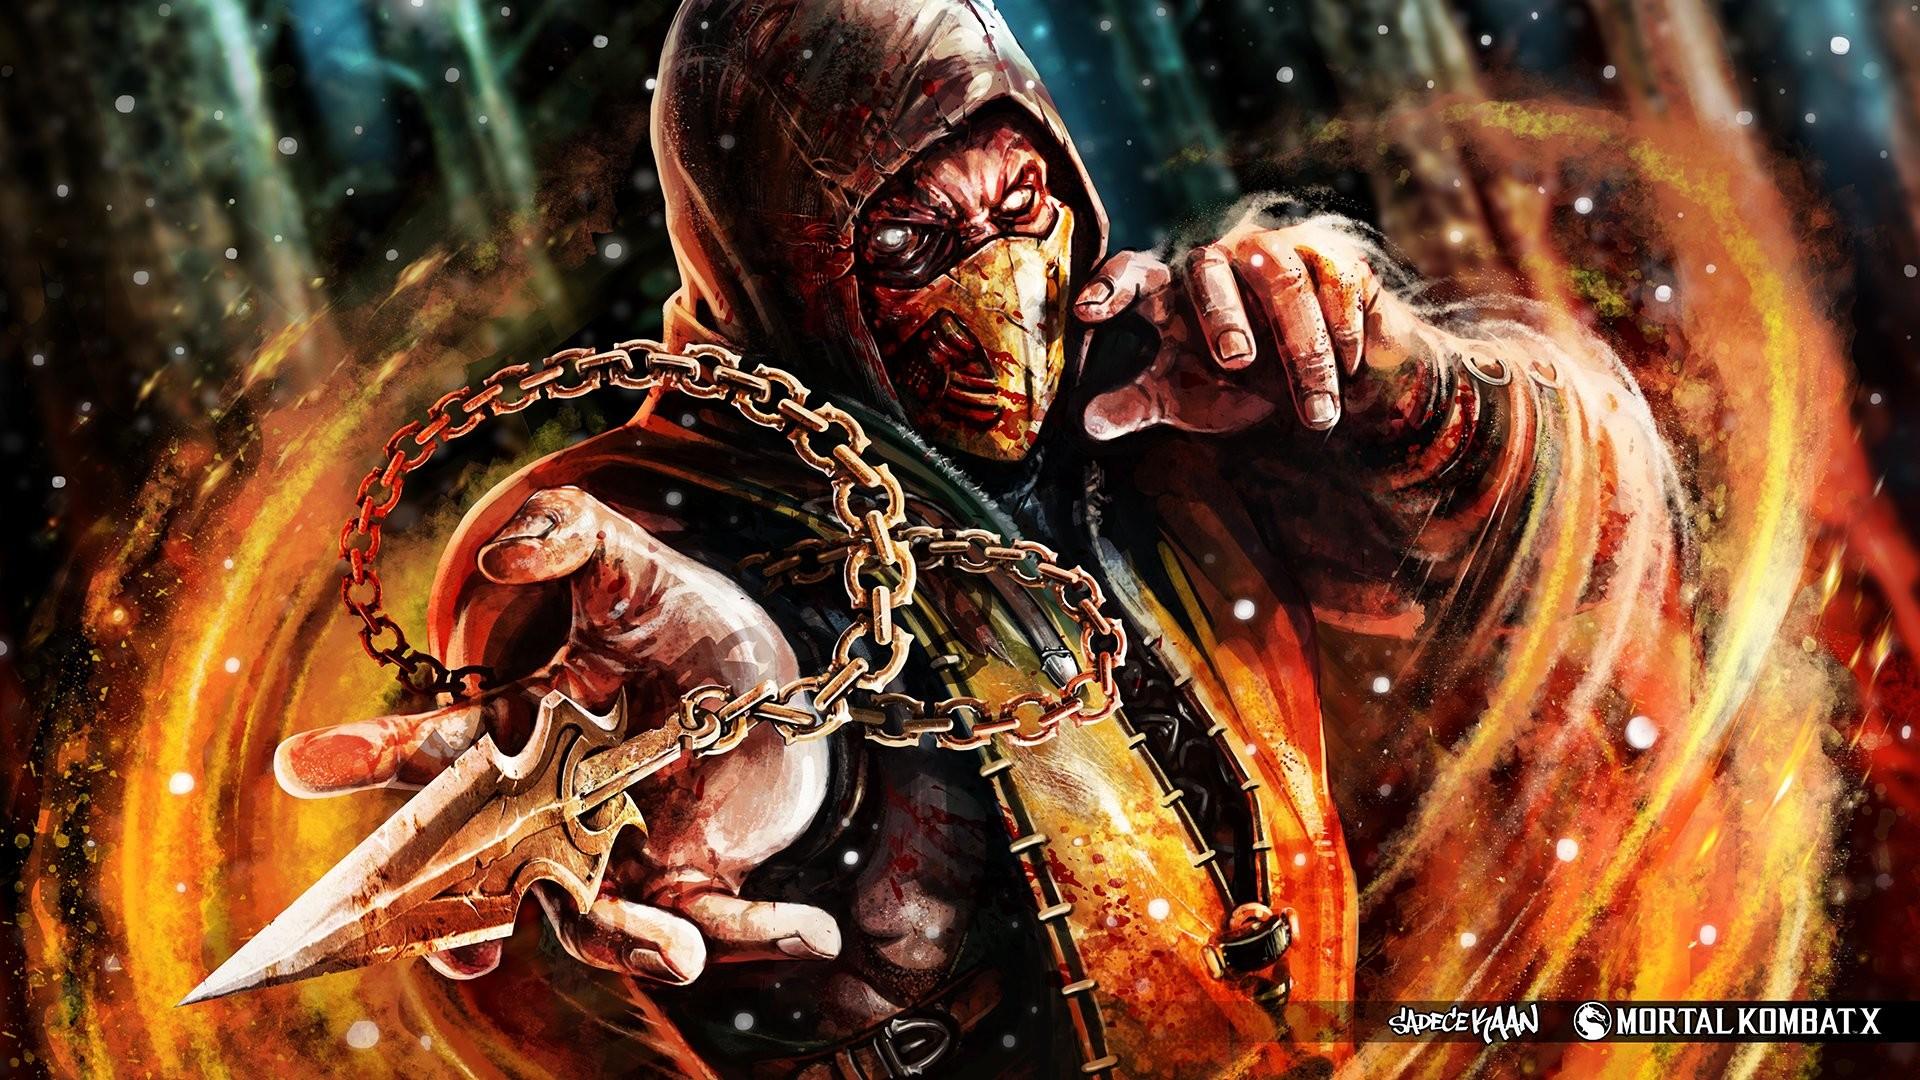 Mortal Kombat Scorpion vs Sub Zero Wallpaper